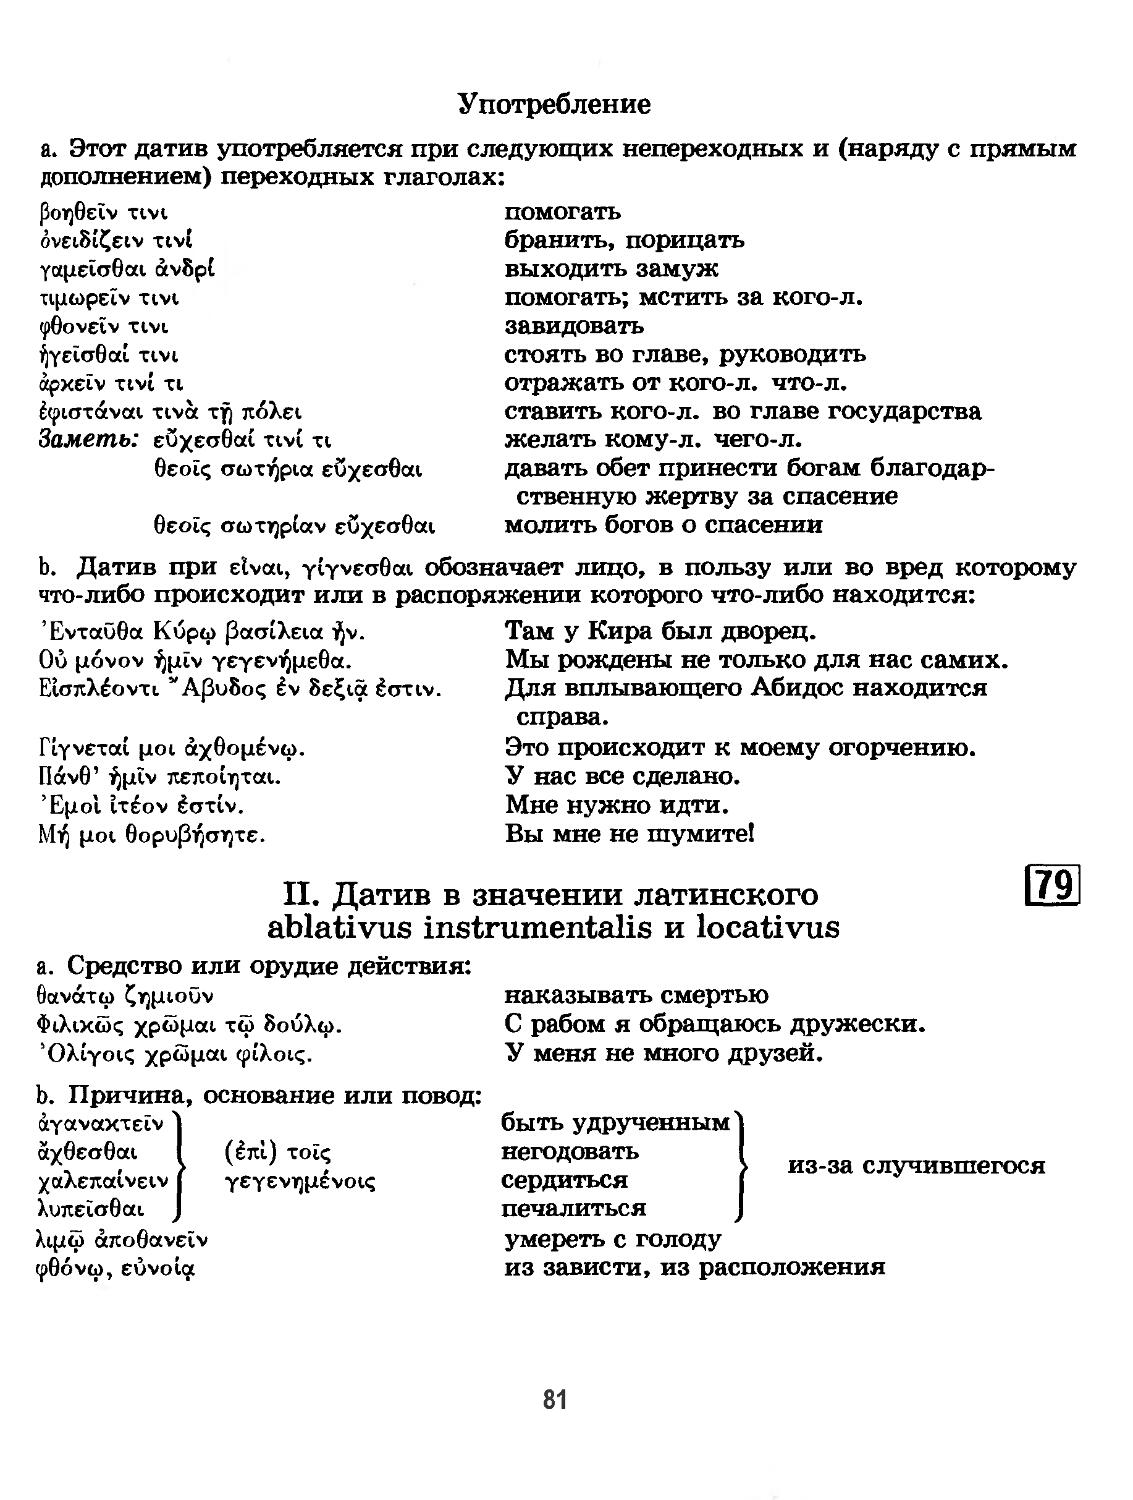 79. II . Датив в значении латинского ablativus instrumentalis и locativus